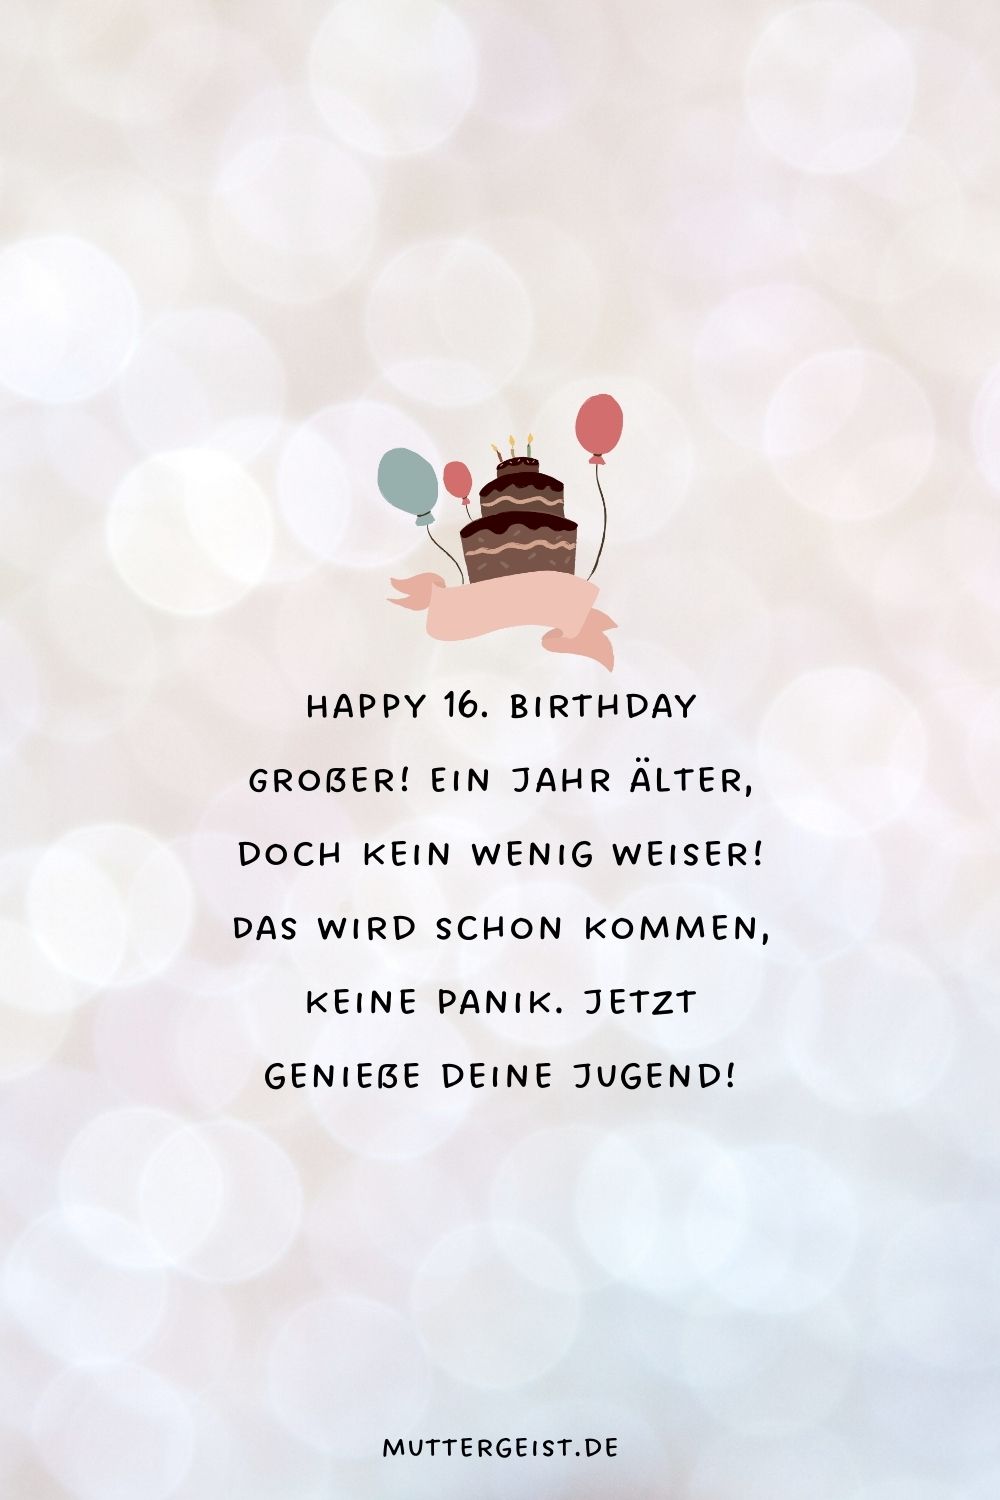 Happy 16. Birthday Großer!